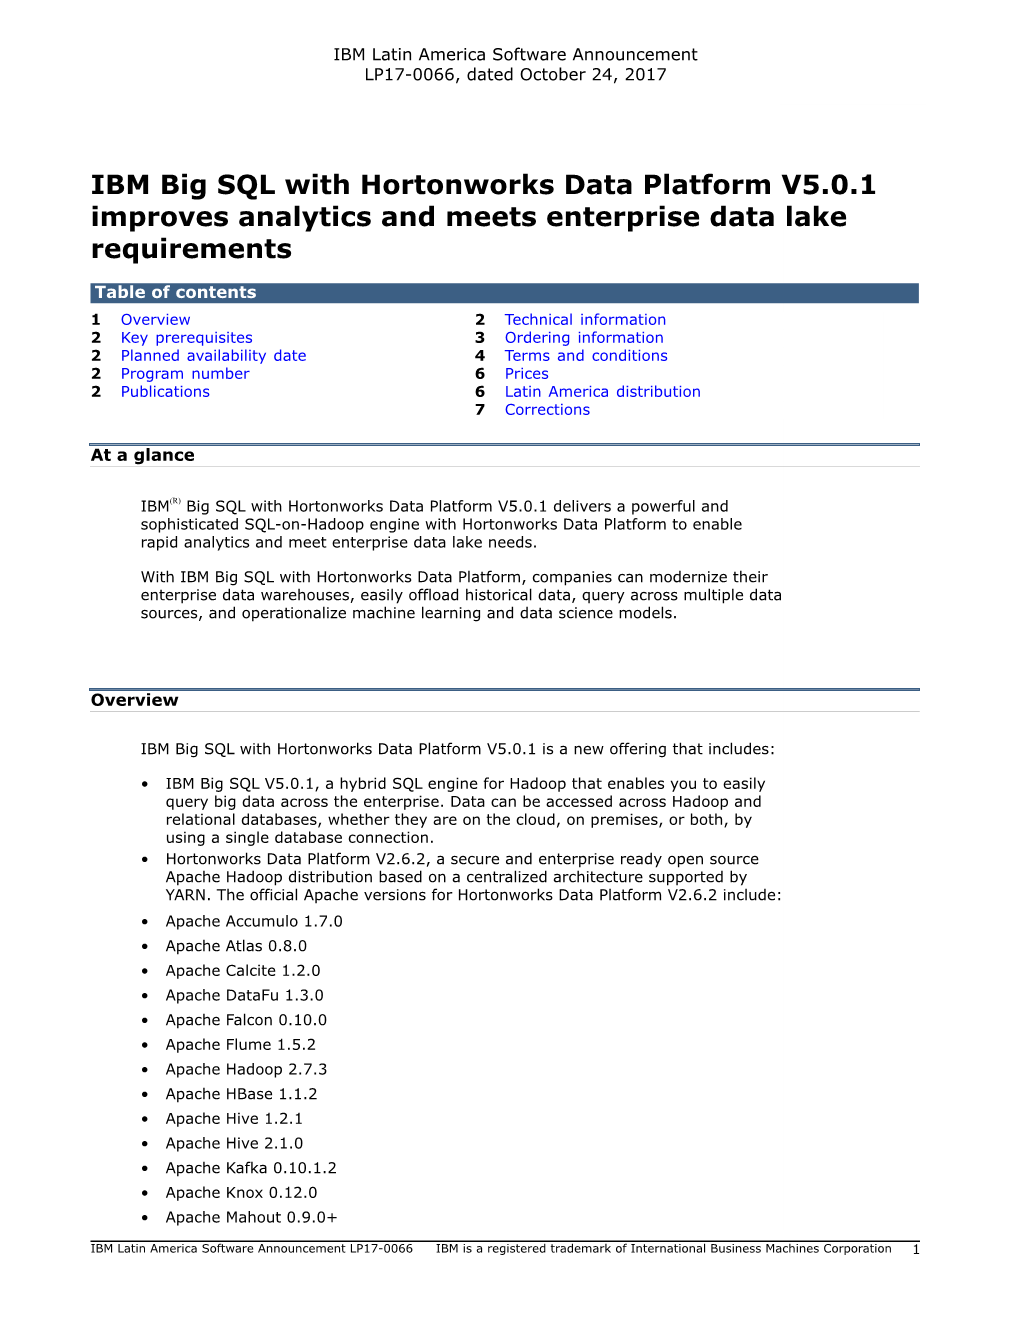 IBM Big SQL with Hortonworks Data Platform V5.0.1 Improves Analytics and Meets Enterprise Data Lake Requirements